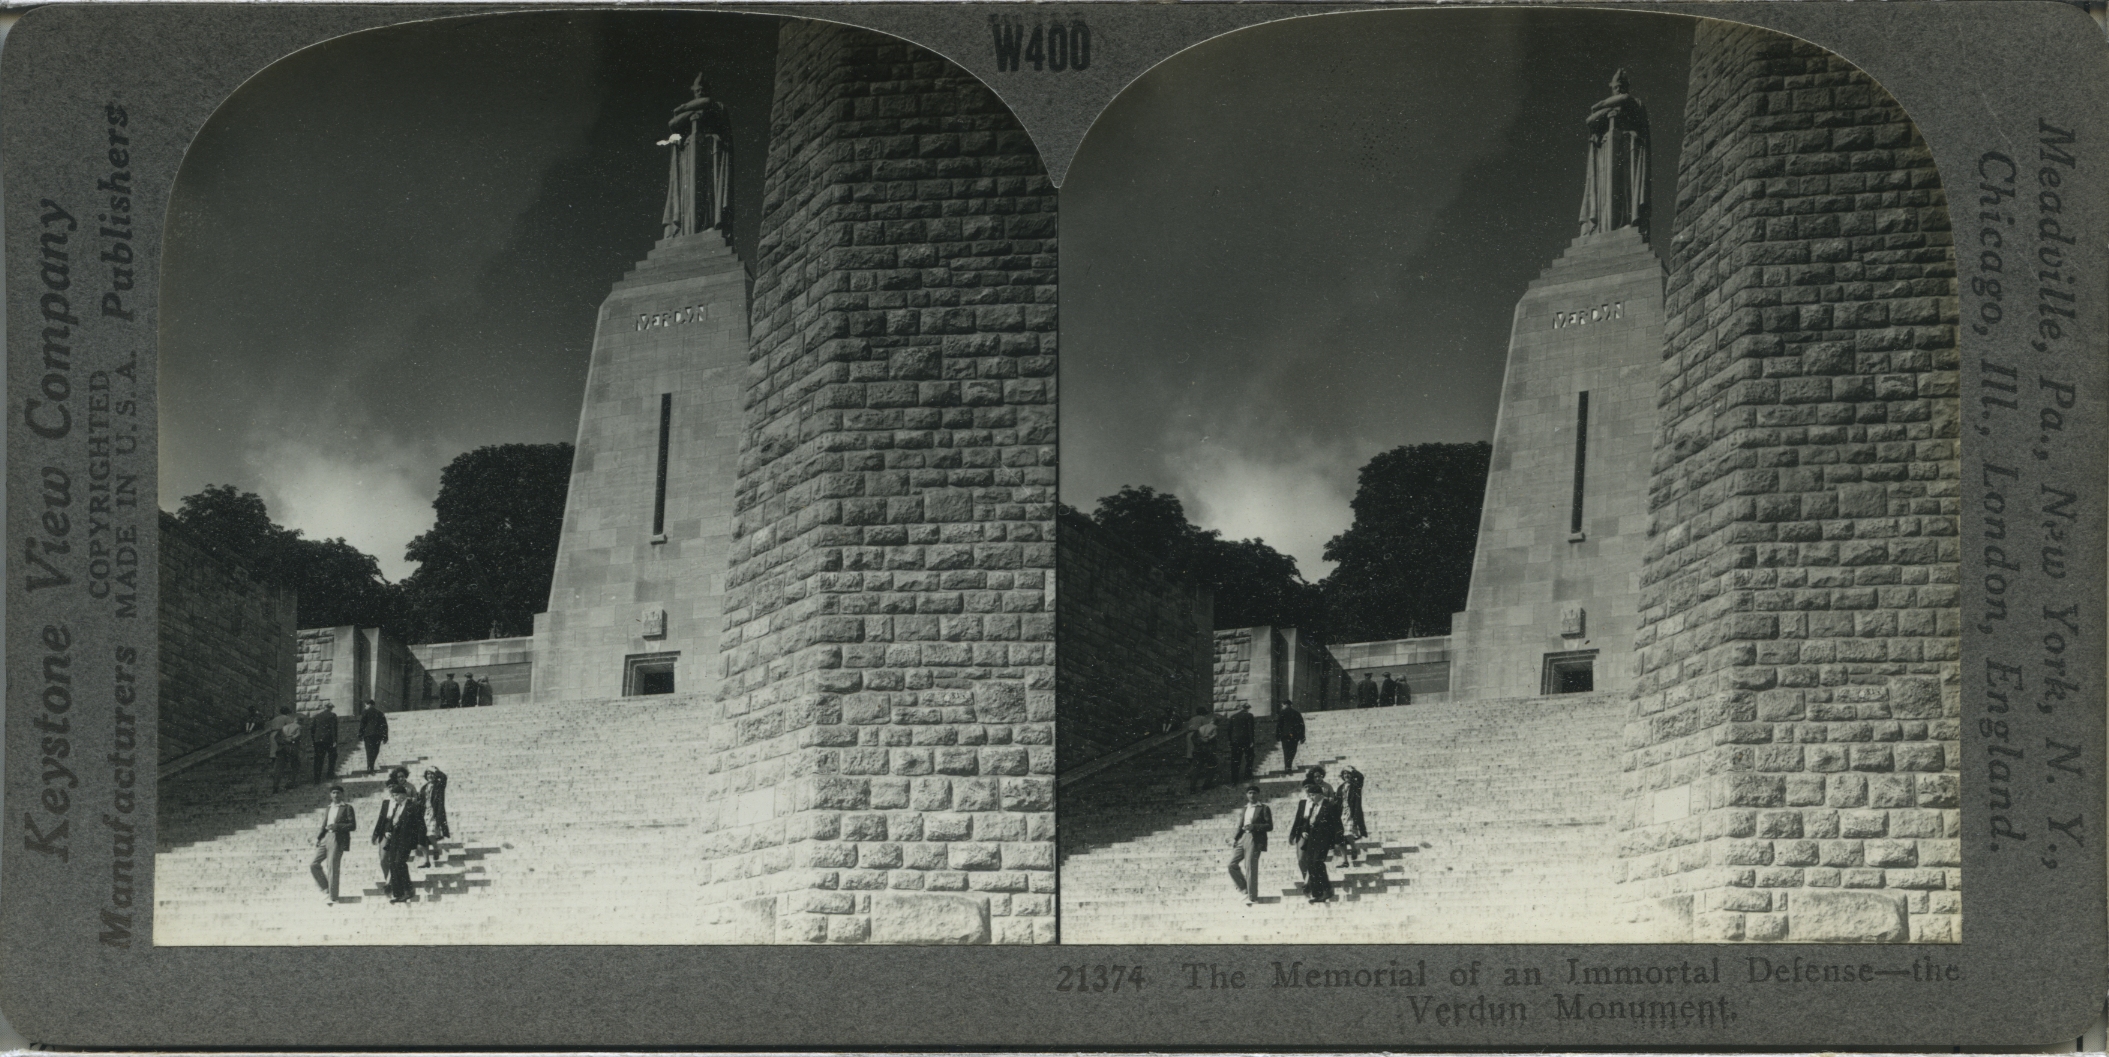 The Memorial of an Immortal Defense--the Verdun Monument